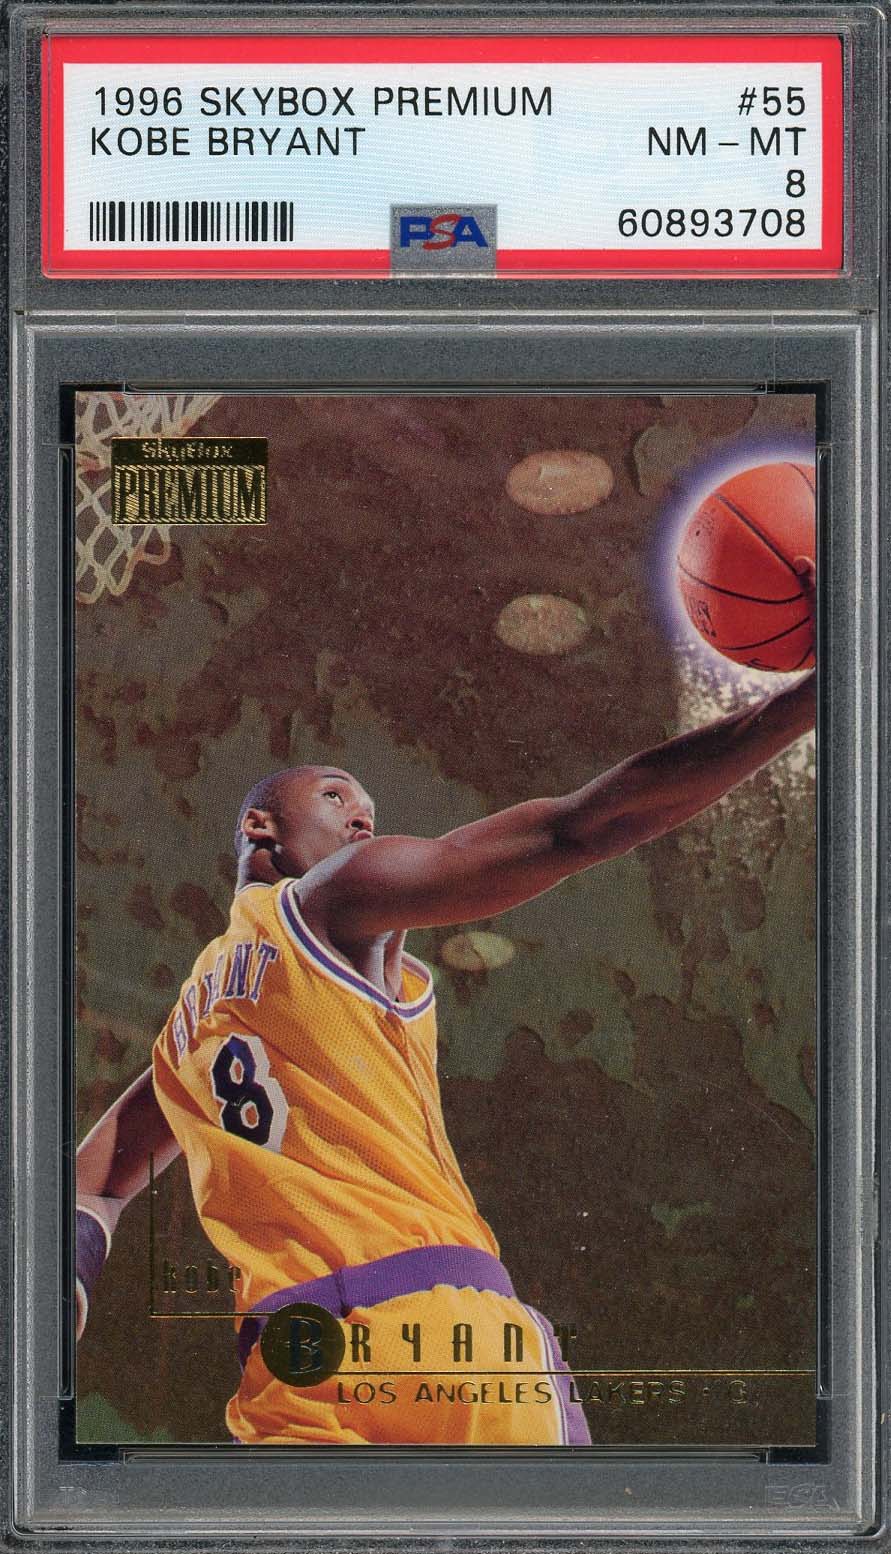 Kobe Bryant 1996 Skybox Premium Basketball Rookie Card #55 Graded PSA 8-Powers Sports Memorabilia